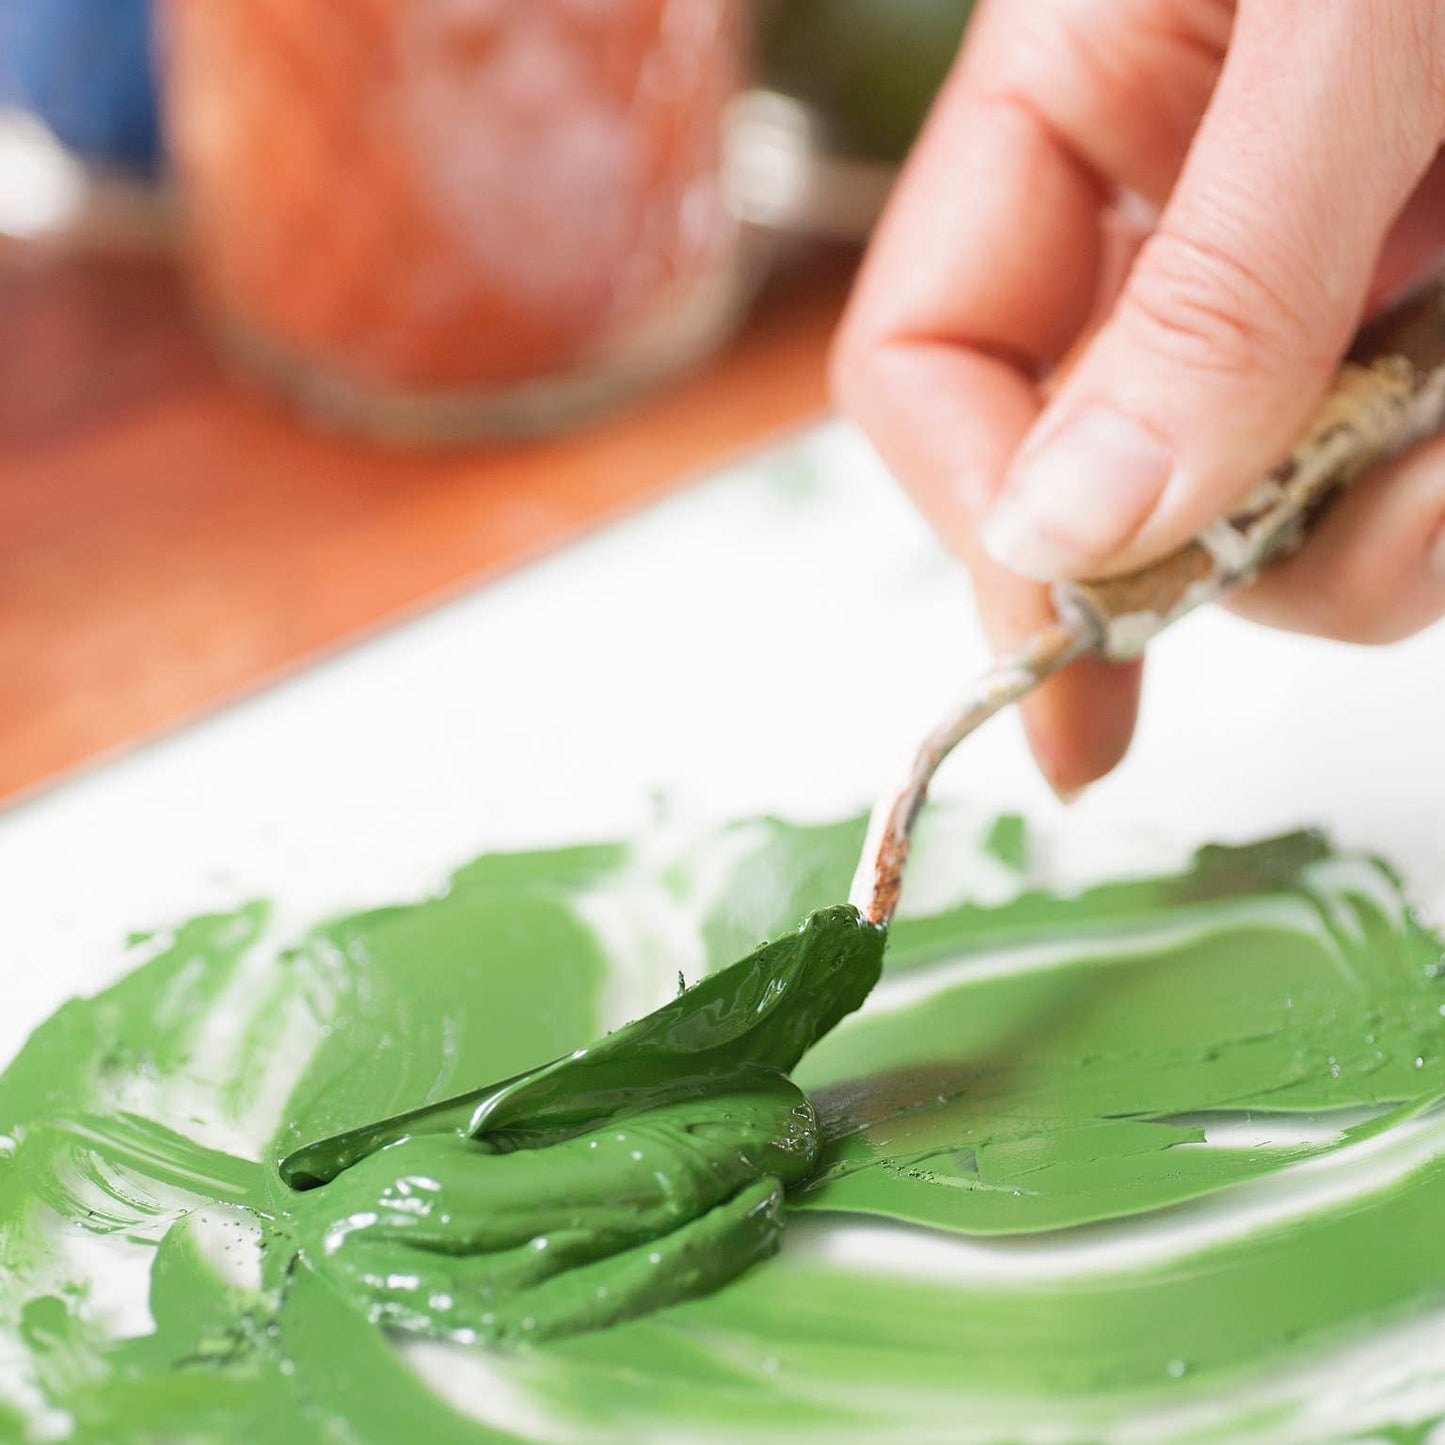 The Complete Eco friendly Artist Oil Paint Kit